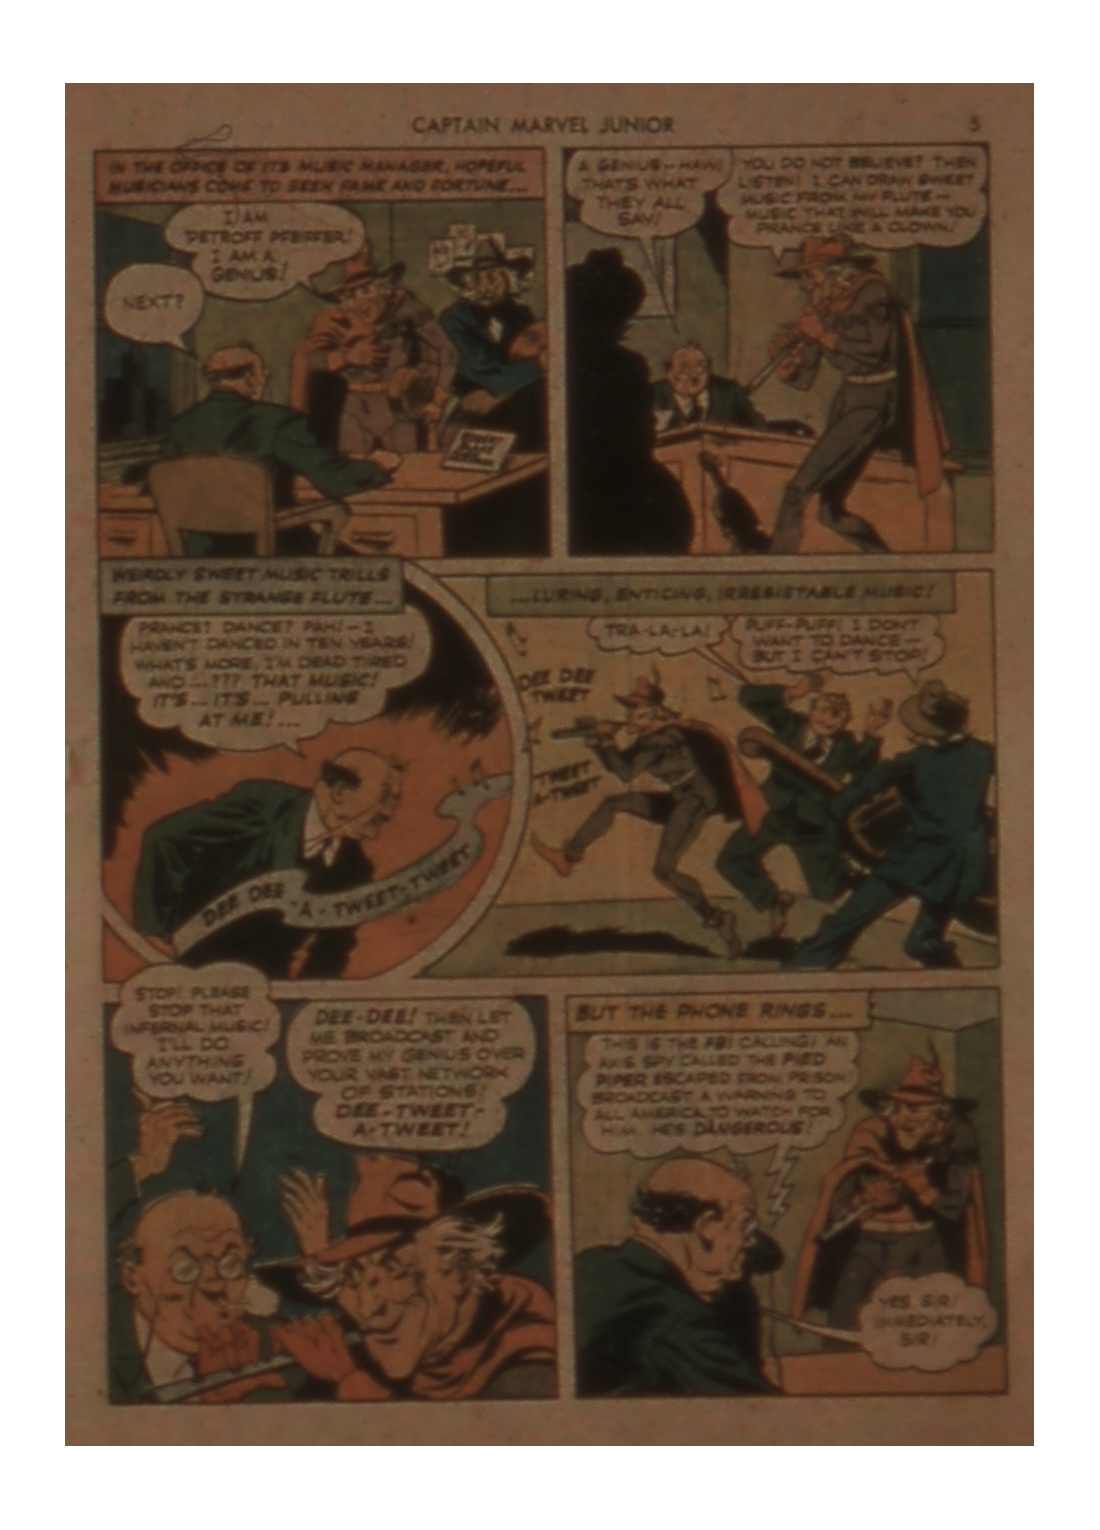 Read online Captain Marvel, Jr. comic -  Issue #3 - 5